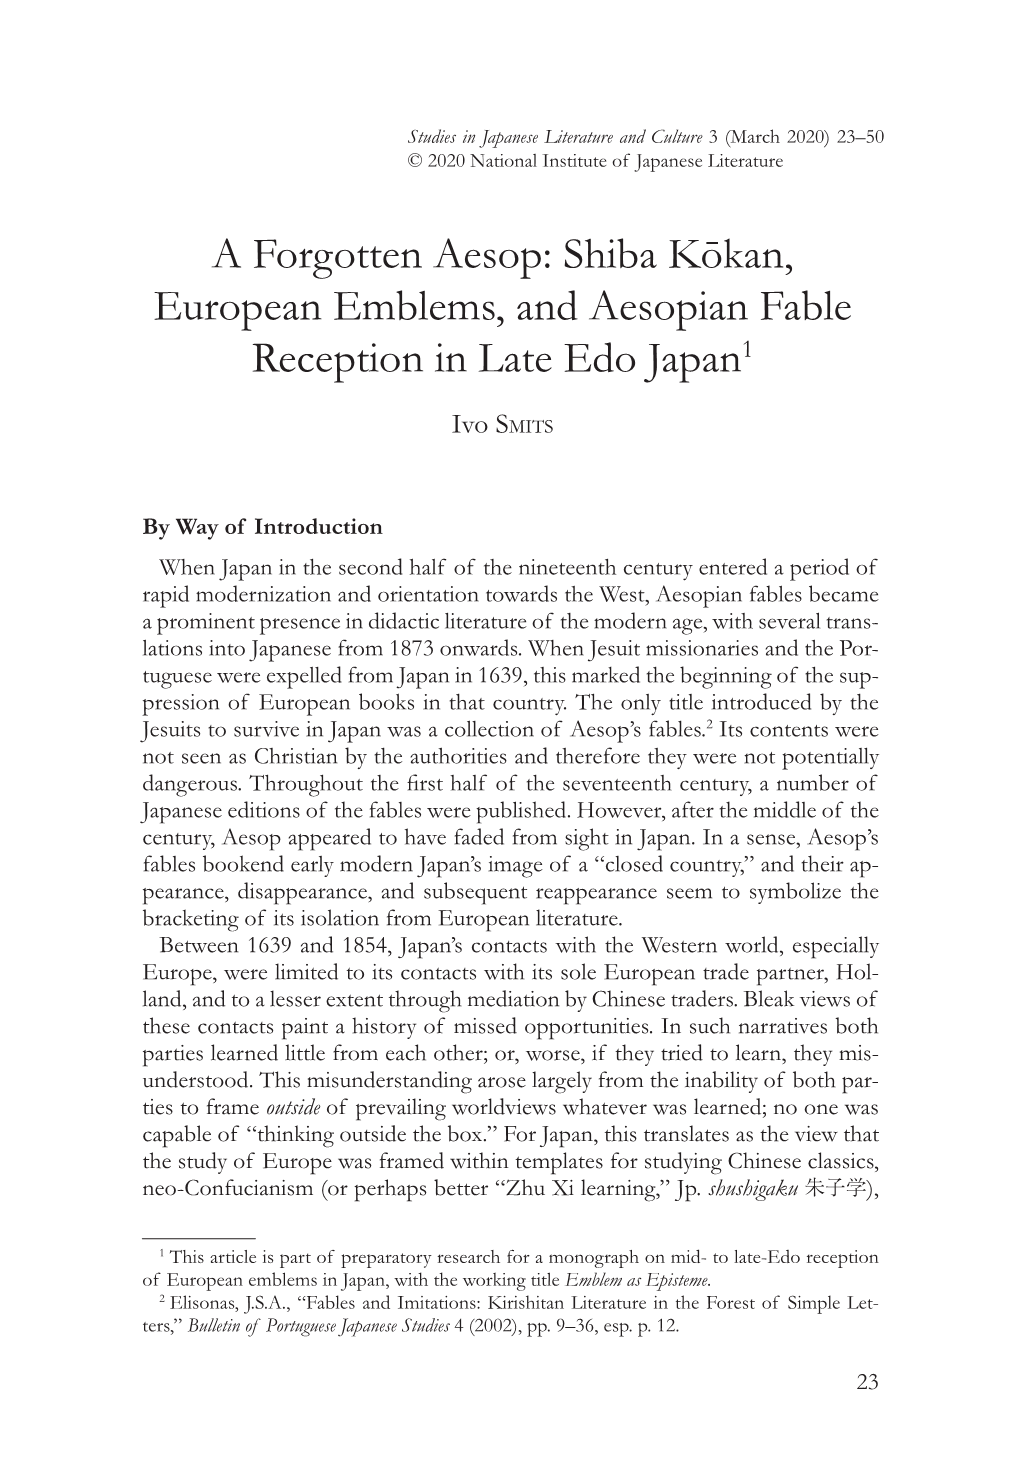 A Forgotten Aesop: Shiba Kōkan, European Emblems, and Aesopian Fable Reception in Late Edo Japan1